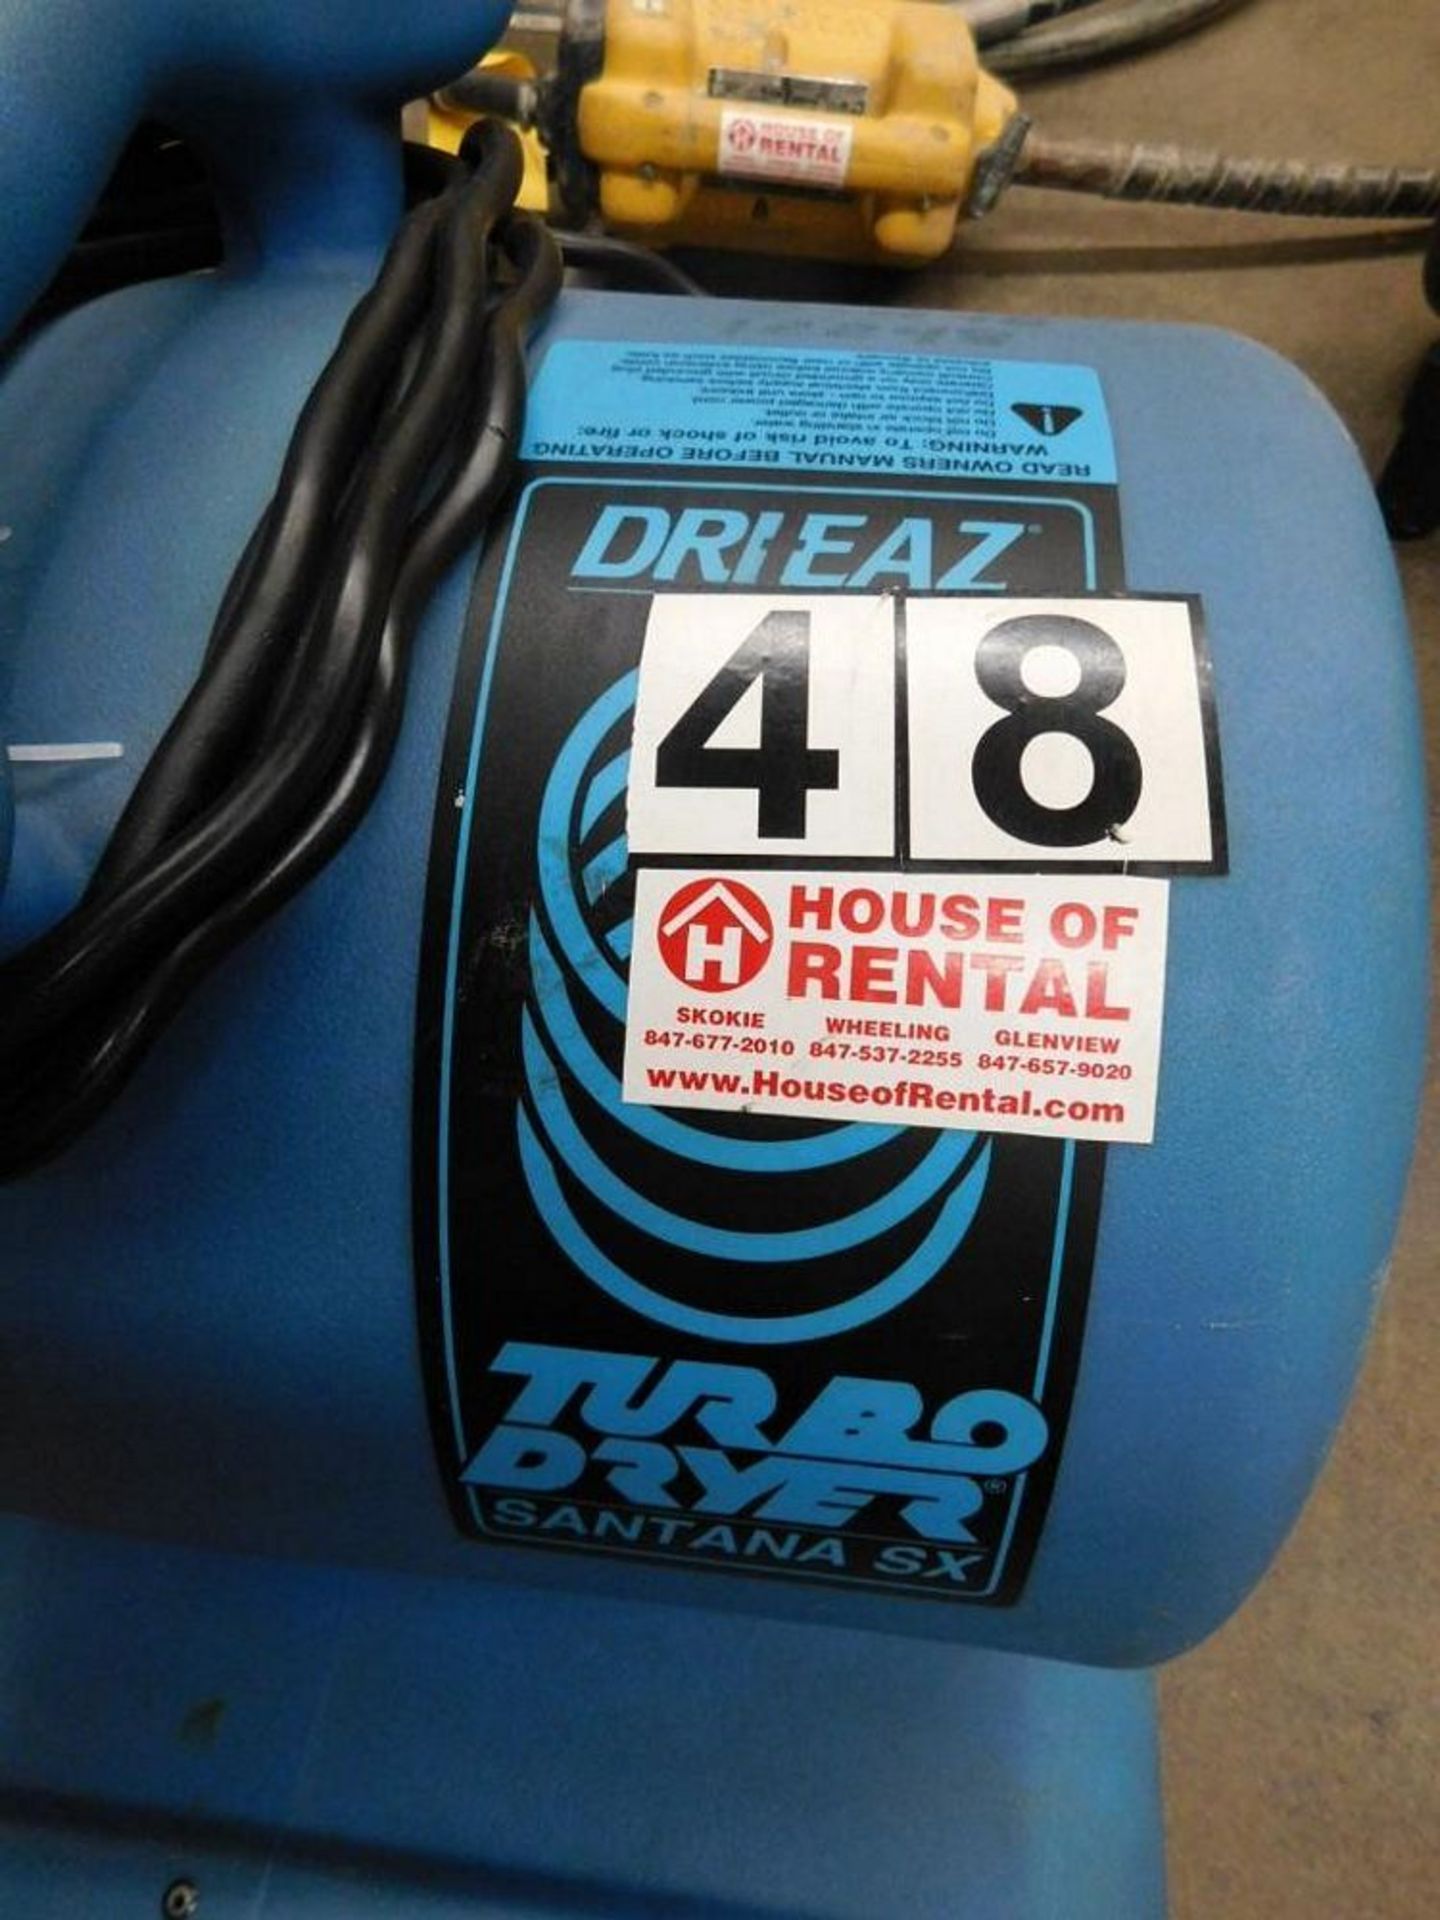 Dri-Eaz Santana SX Turbo Dryer Carpet Fan (LOCATION: 318 N. Milwaukee Ave., Wheeling, IL 60090) - Image 4 of 4